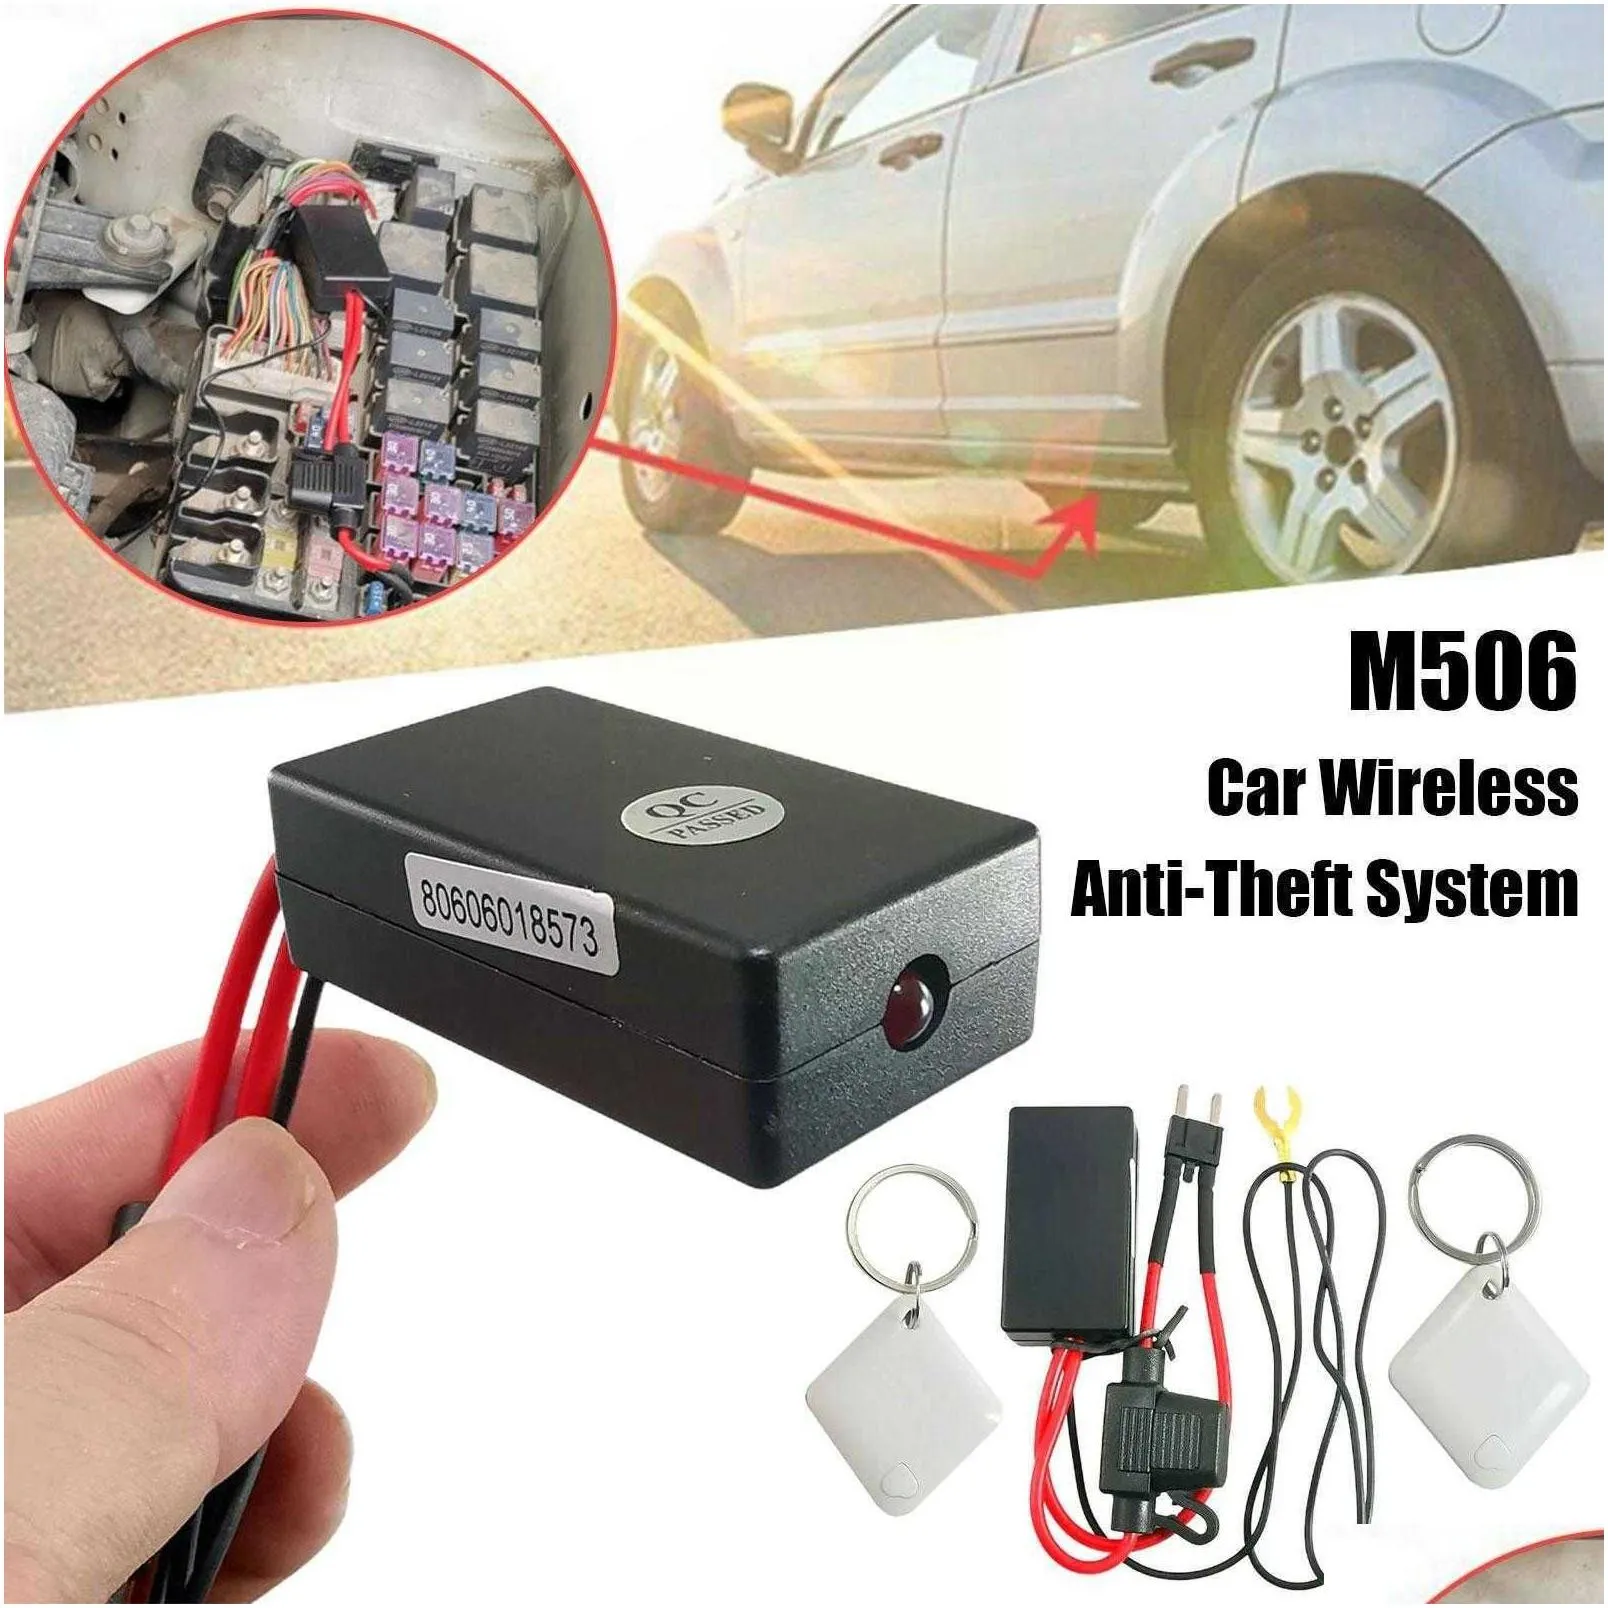 Car Other Auto Electronics New Immobilizer System -Sensing Wireless Intelligent Cut Alarm Anti-Theft Lock Too Circuit Engine Off D S0R Dhrku